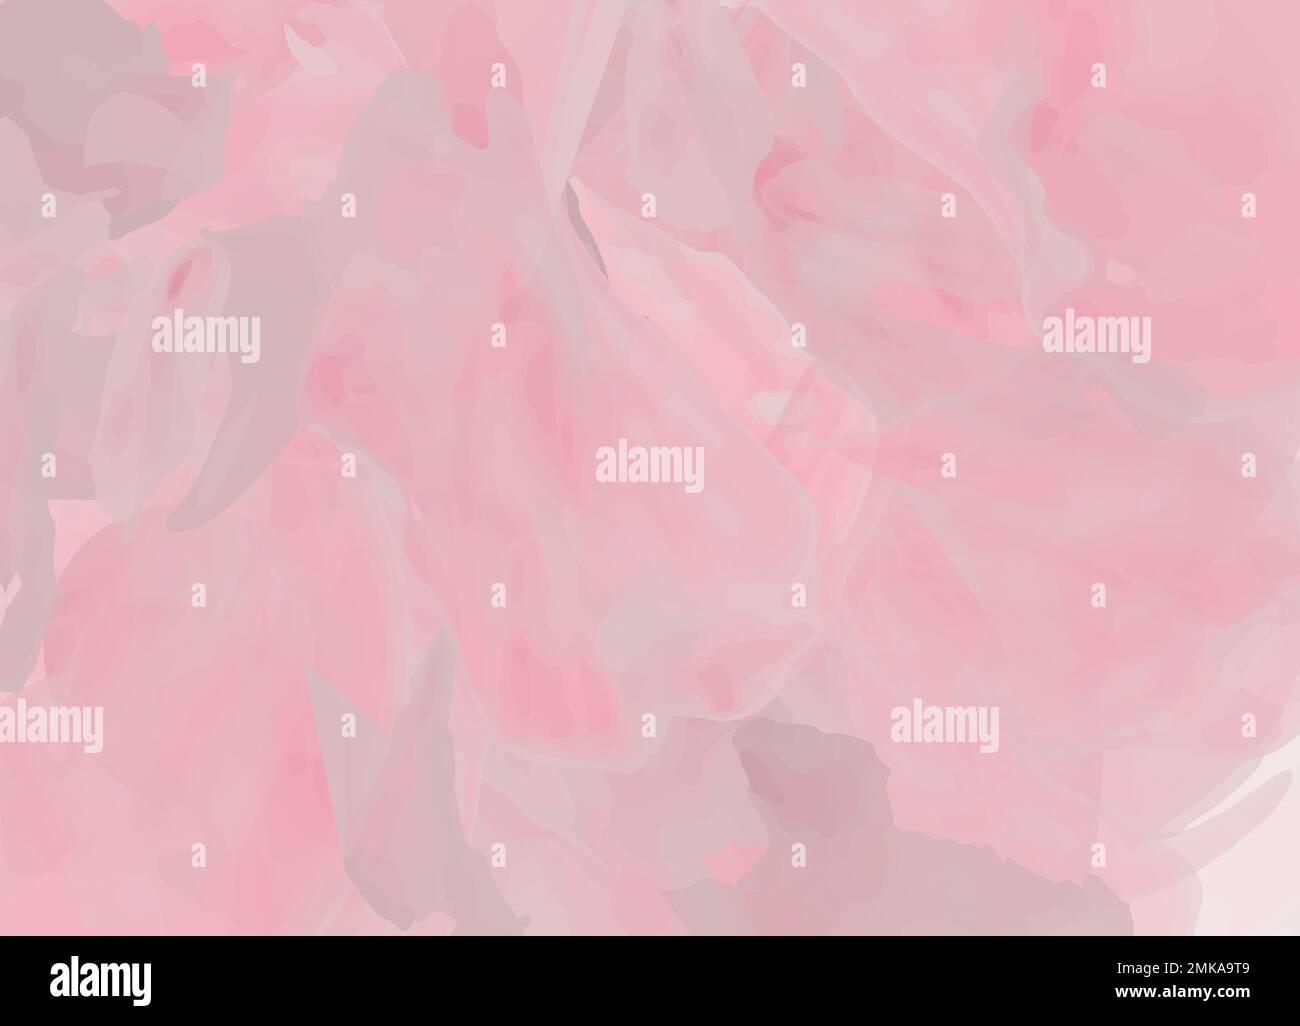 Abstrakter pinkfarbener Hintergrund für dein Design. Tintenboho-Farbmuster. Pastellrosa. Vektordarstellung. Stock Vektor